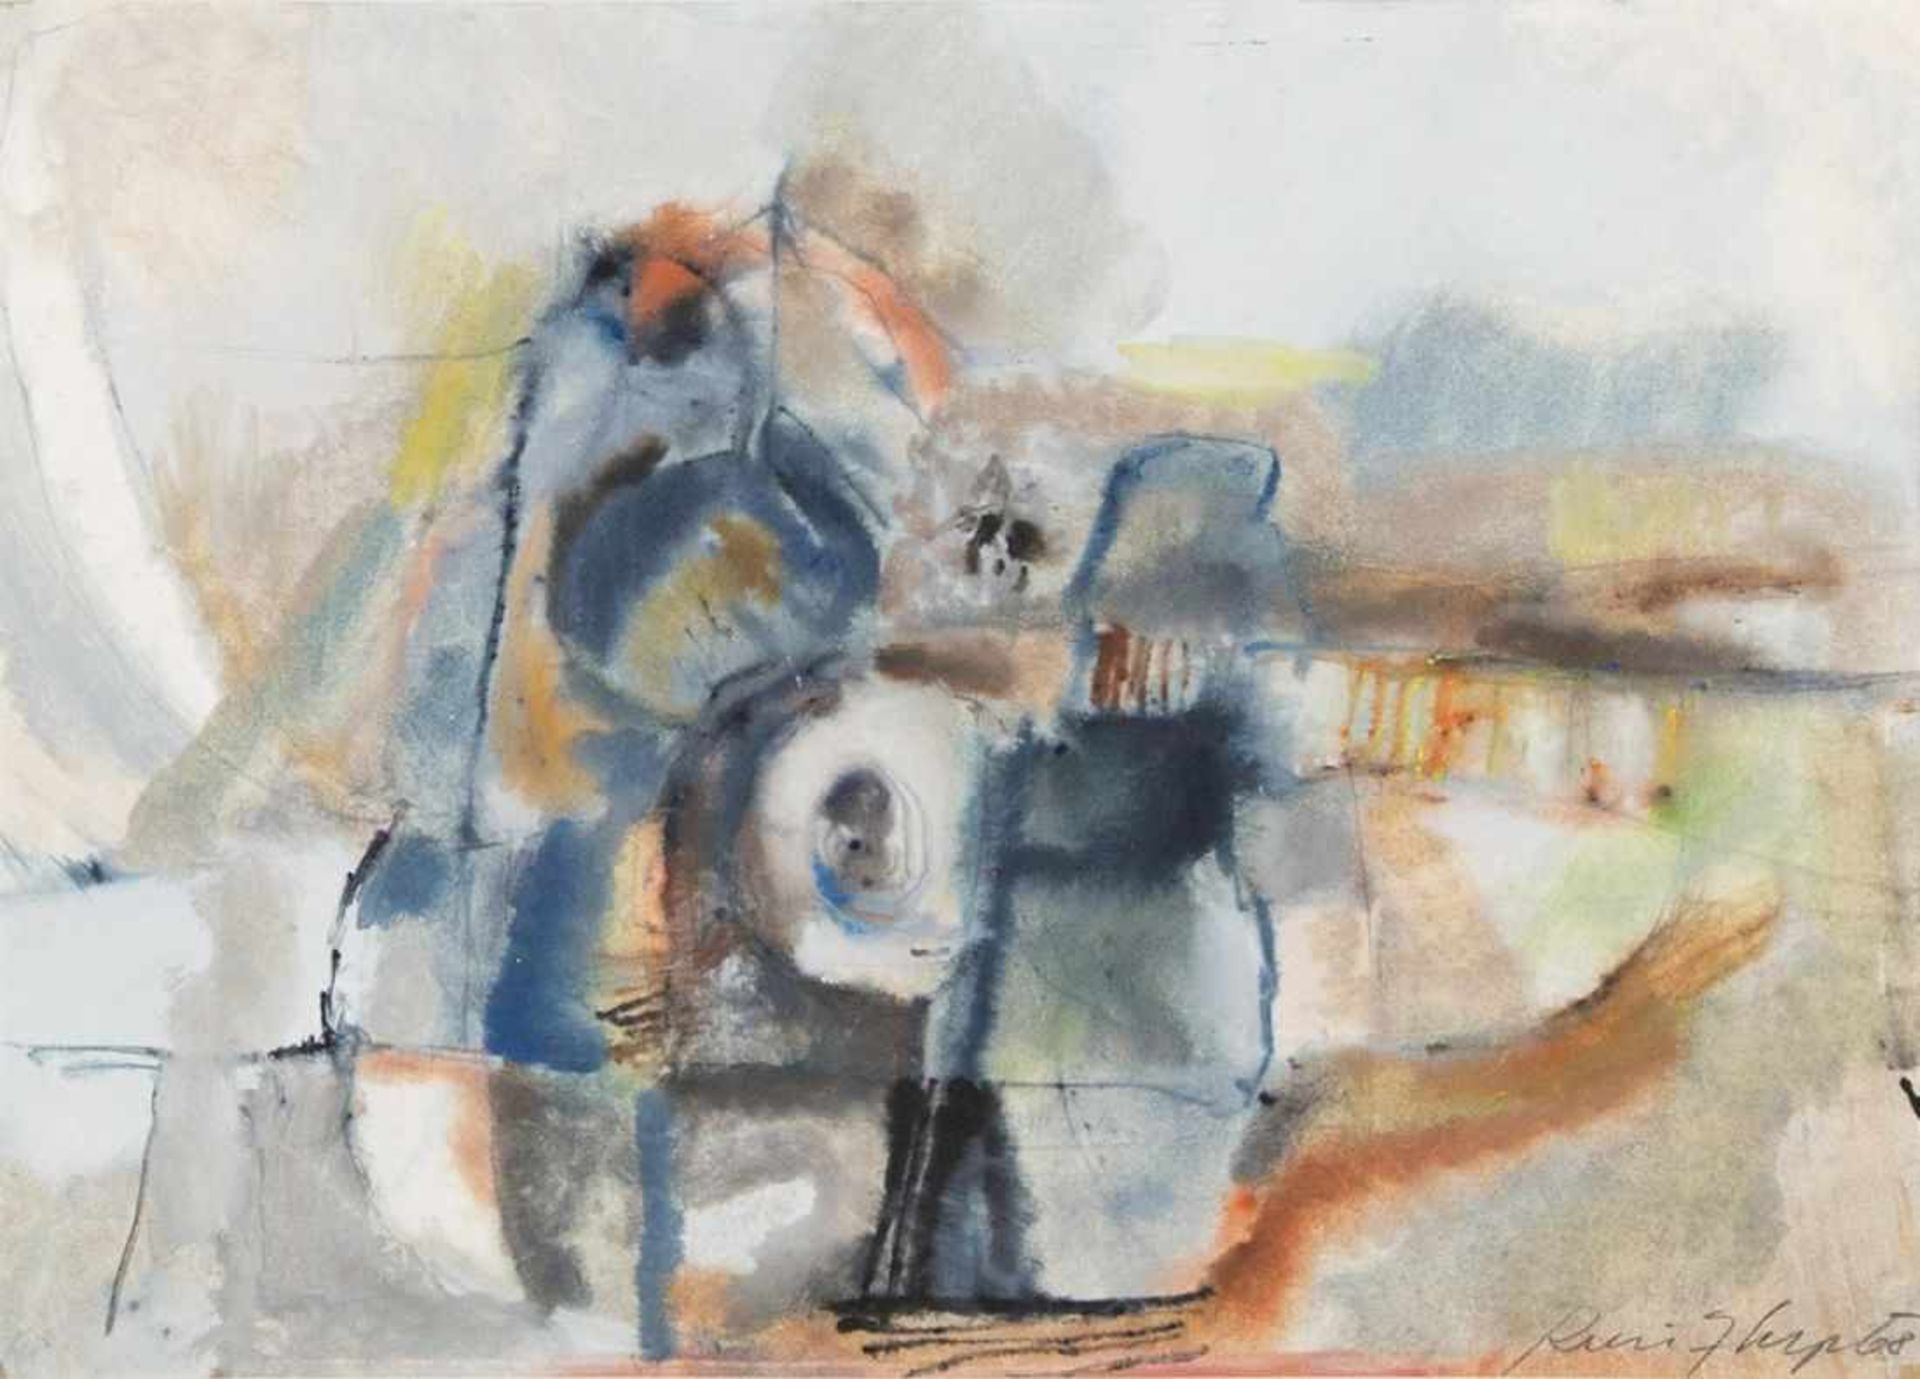 KARL KREUZBERGER (1916 WIEN - 1990 WIEN) o. T., 1968 Aquarell auf Papier, 41 x 58 cm, Passepartout